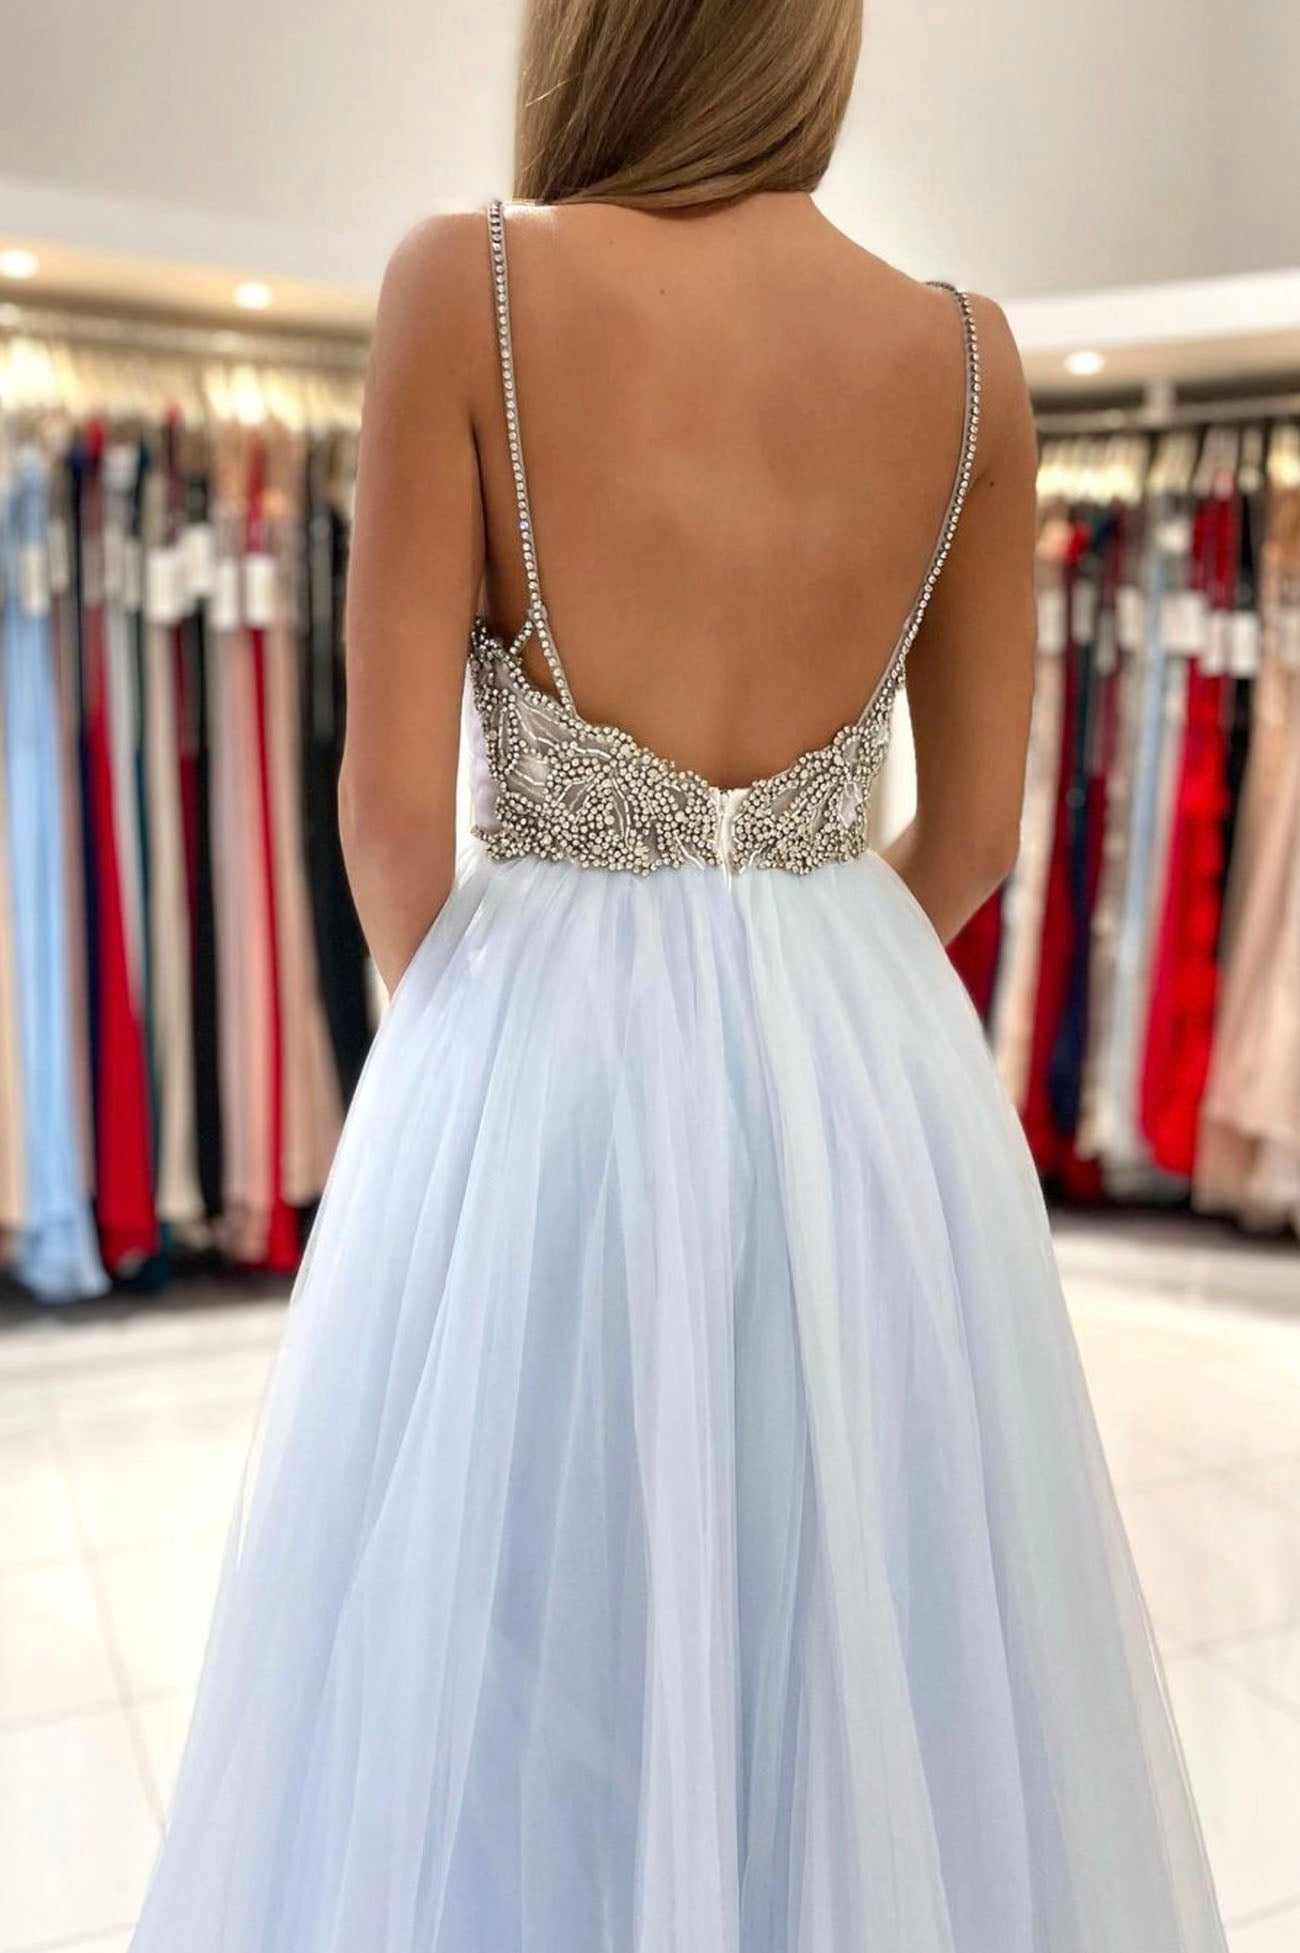 Blue V-Neck Tulle Long Prom Dress, A-Line Spaghetti Straps Evening Party Dress